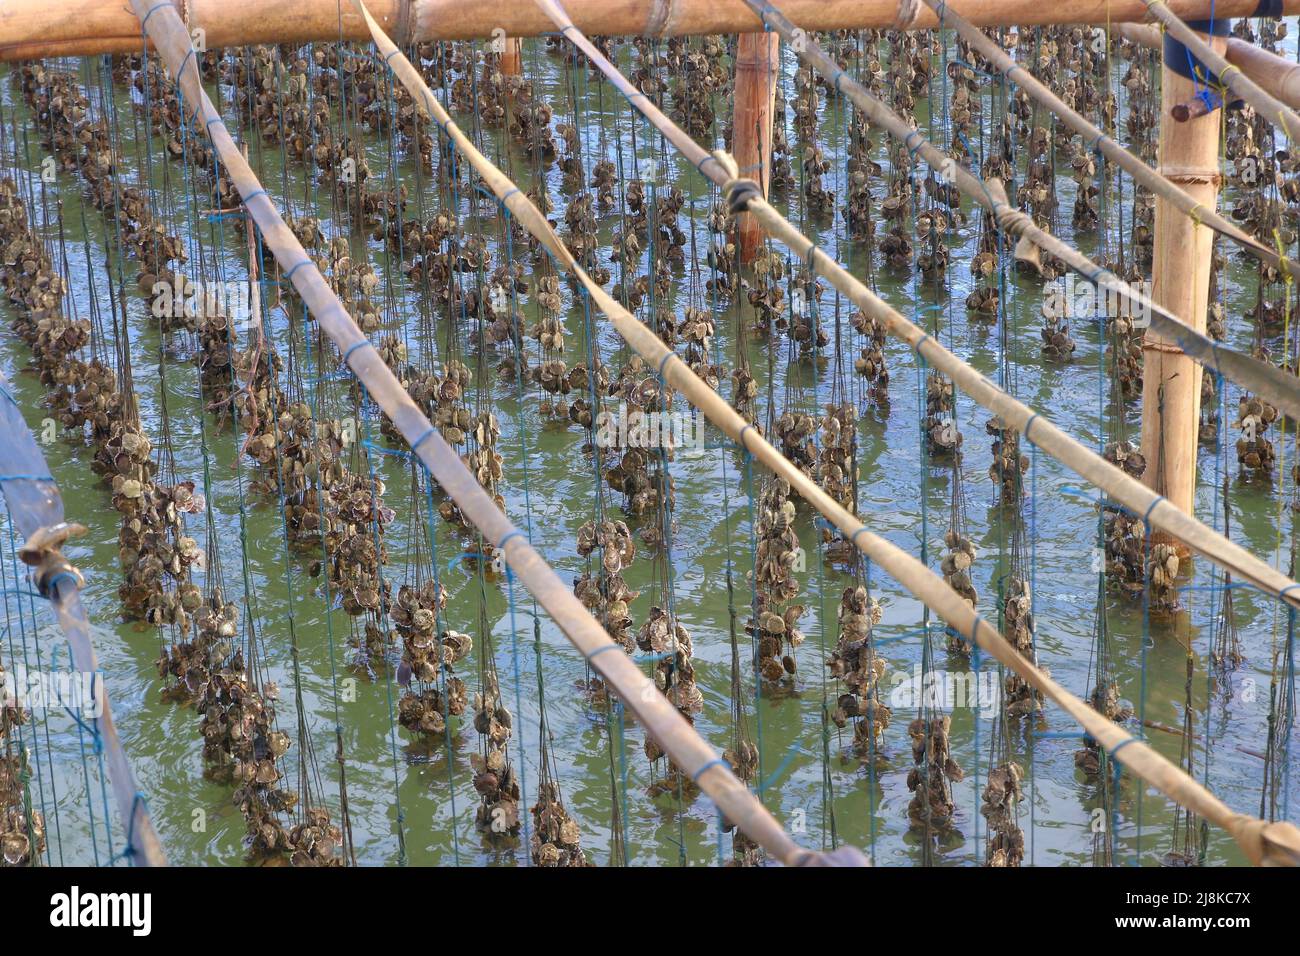 shellfish farming, oysters farm in the sea Stock Photo